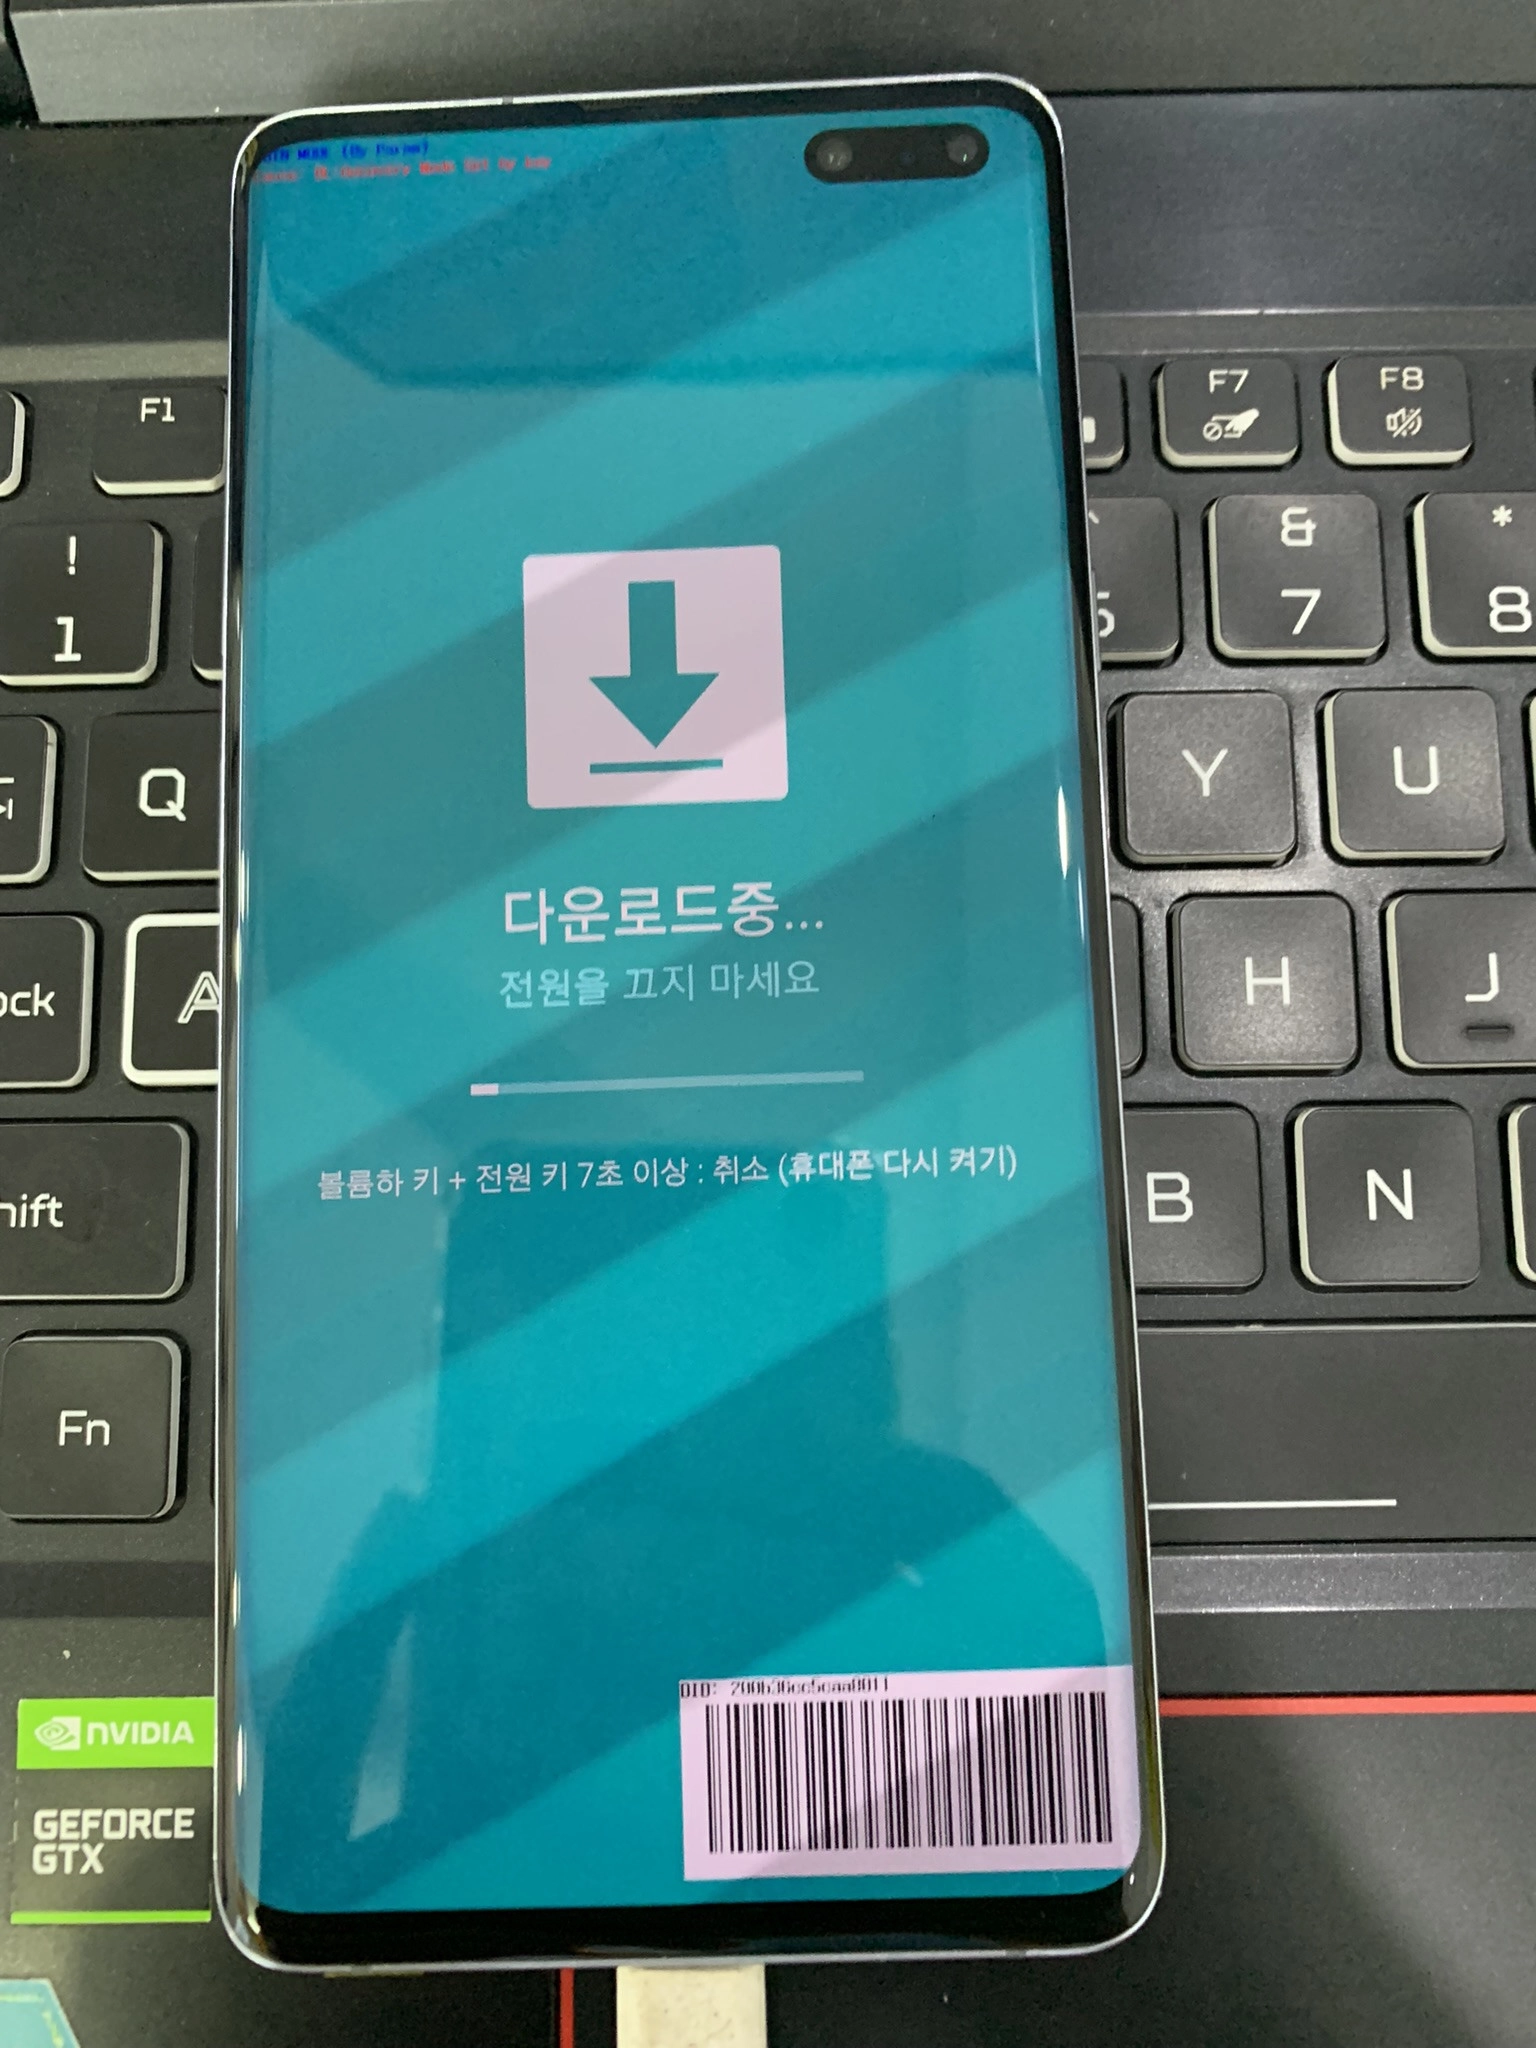 huong-dan-nang-cap-android-12-cho-dien-thoai-samsung-s10-5g-6